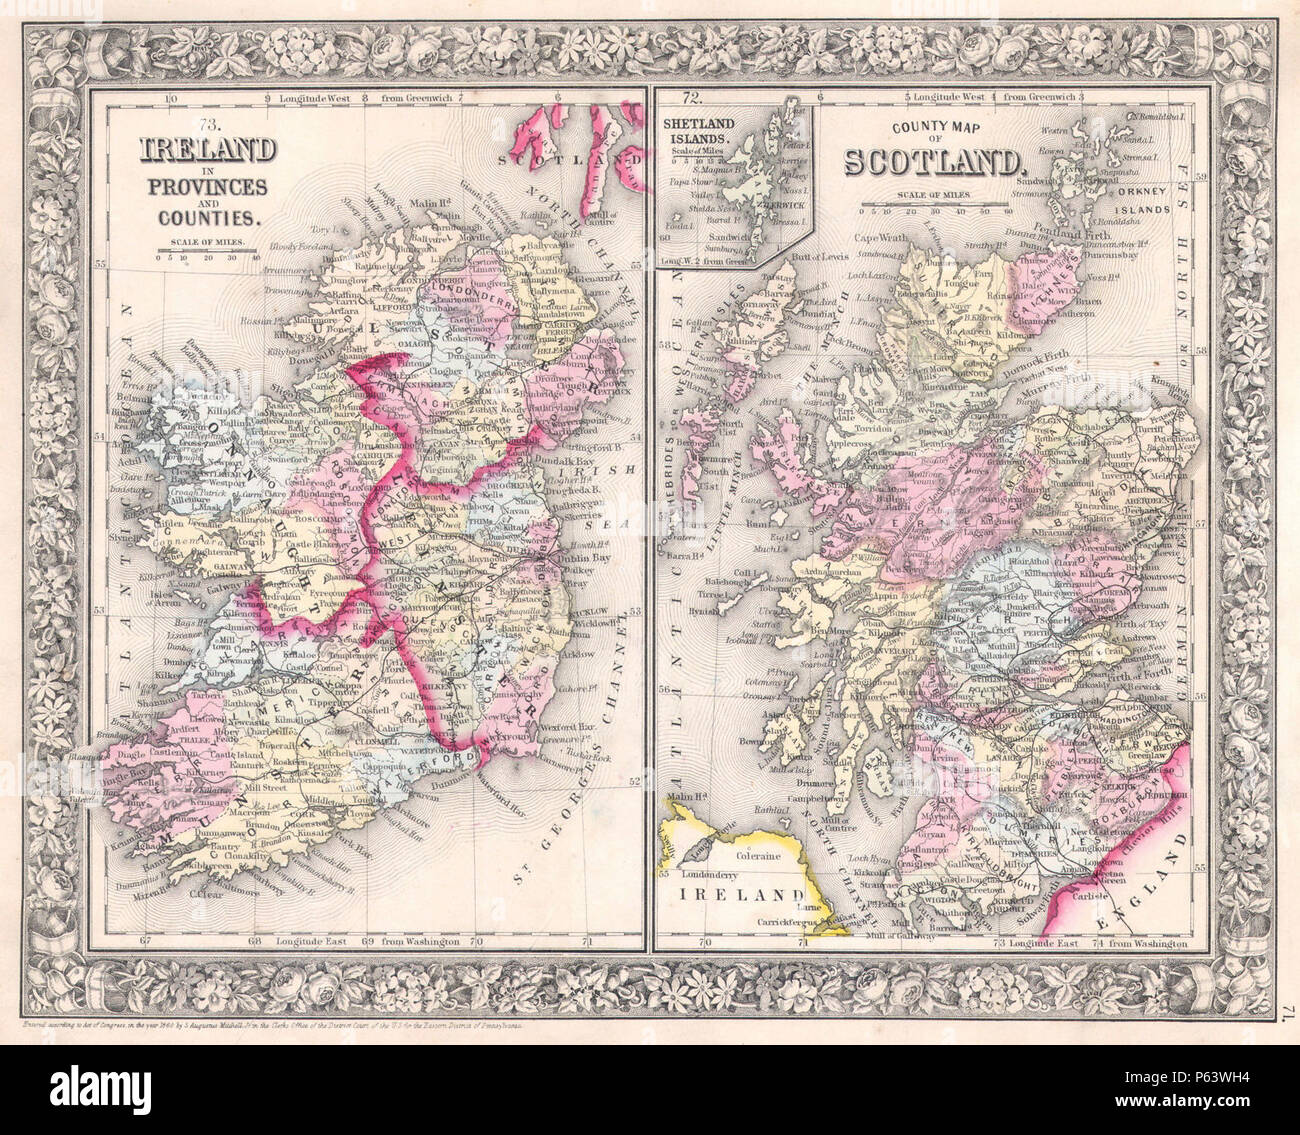 1864 Mitchell Map of Ireland and Scotland - Geographicus - IrelandScotland-mitchell-1864. Stock Photo